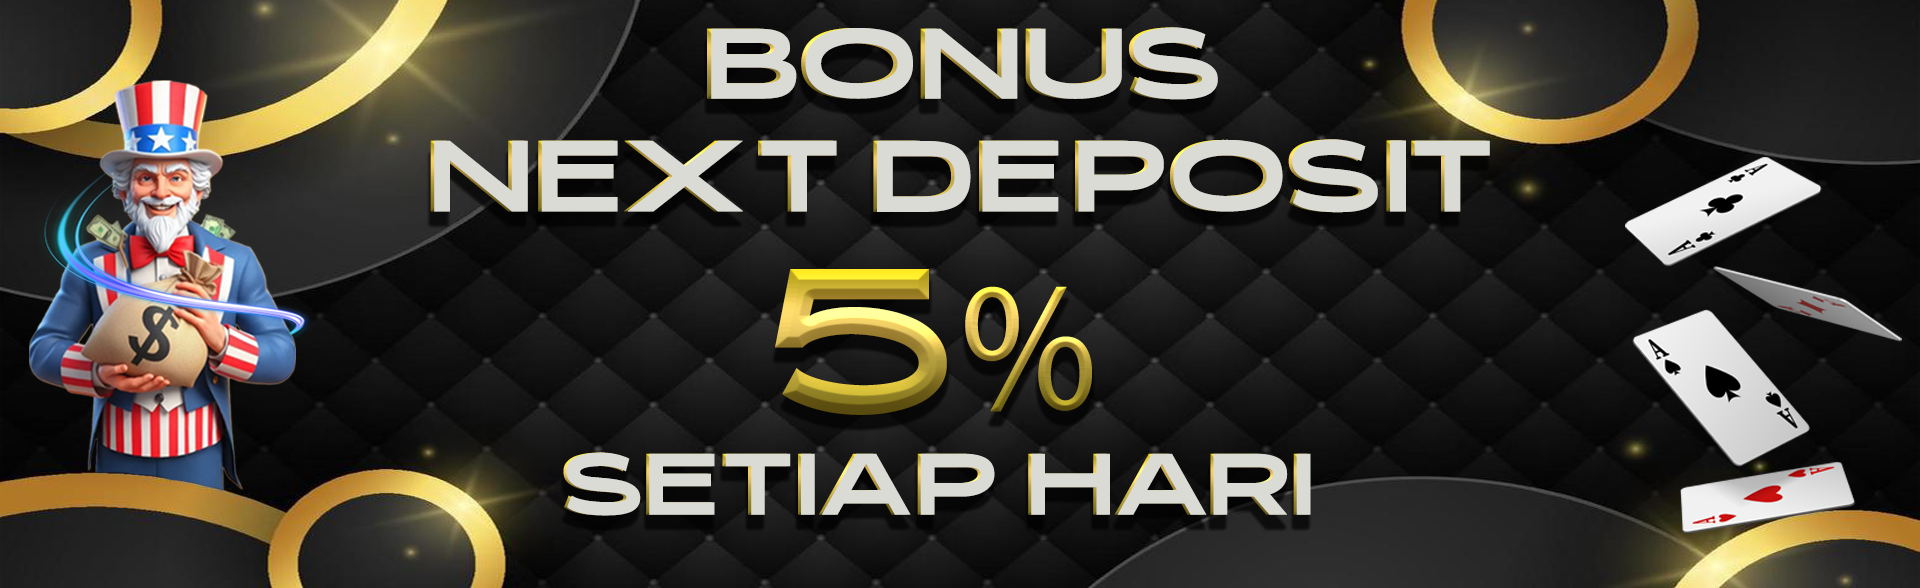 Bonus Next Deposit 5 % Setiap Hari